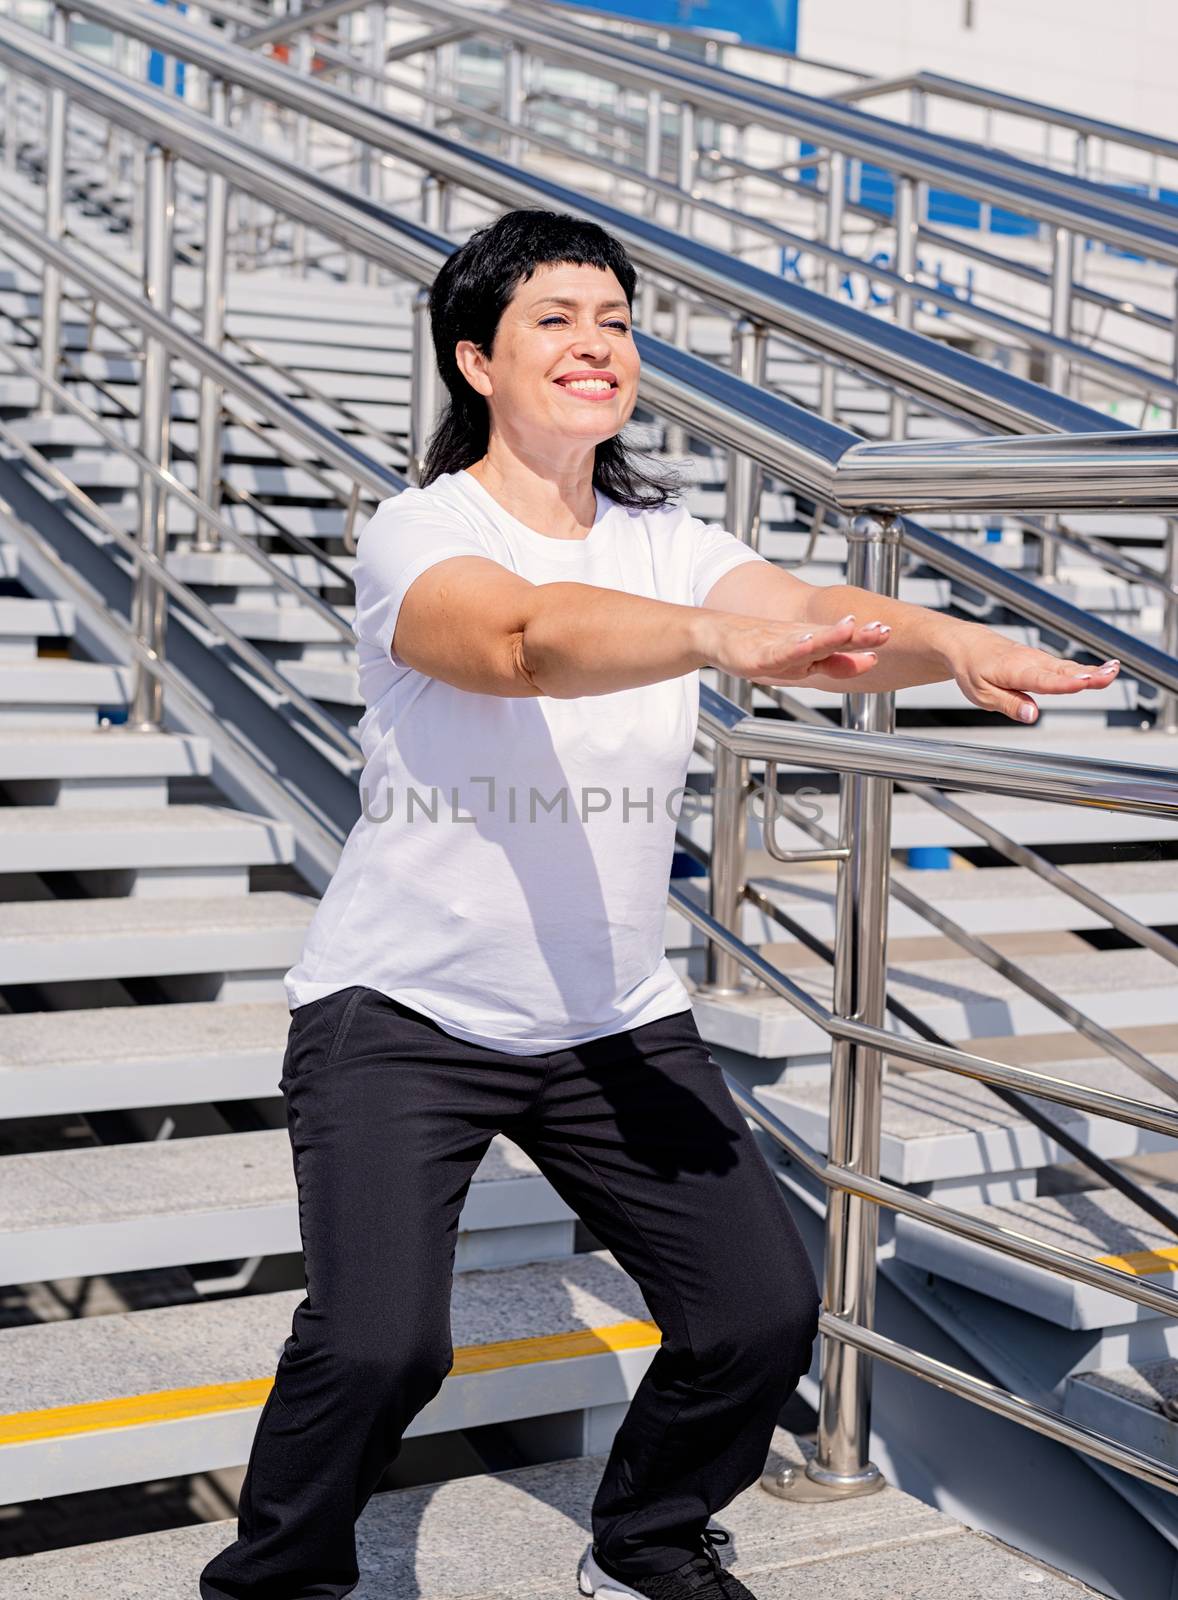 Smiling senior woman squatting outdoors on urban background by Desperada